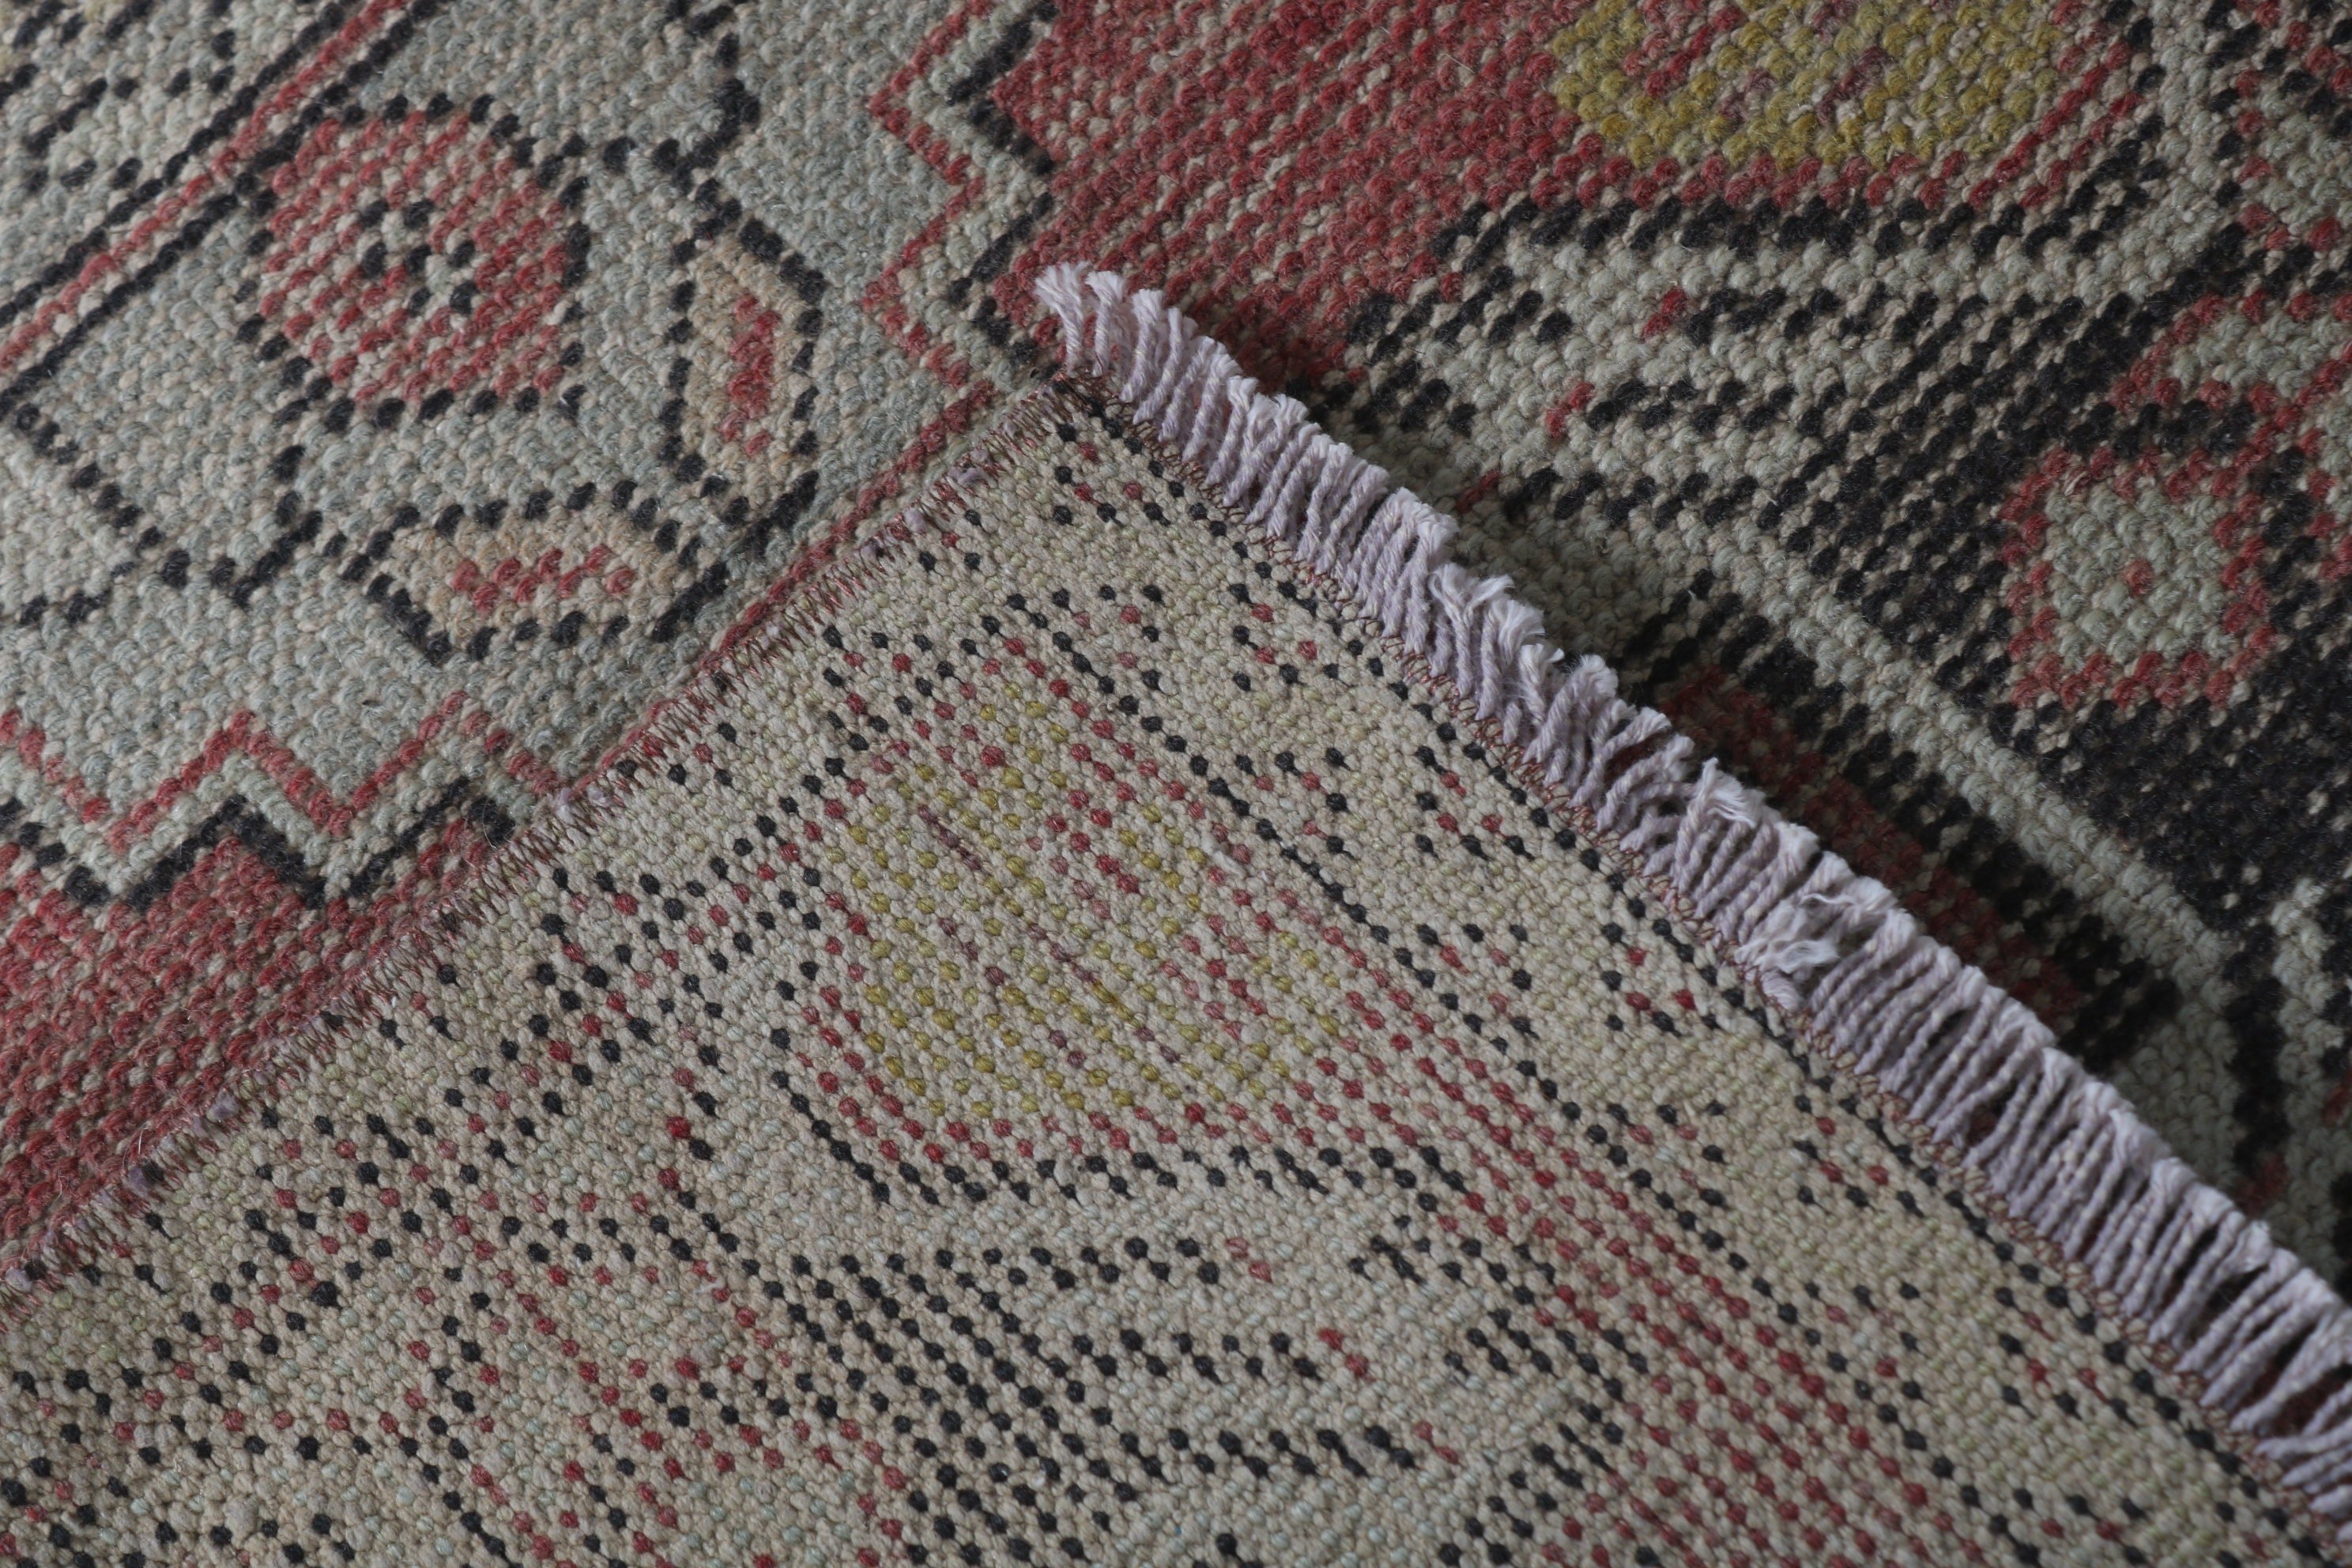 Bedroom Rug, Rugs for Nursery, Antique Rug, Turkish Rug, Red Antique Rugs, Bath Rug, Vintage Rugs, 1.7x3.1 ft Small Rug